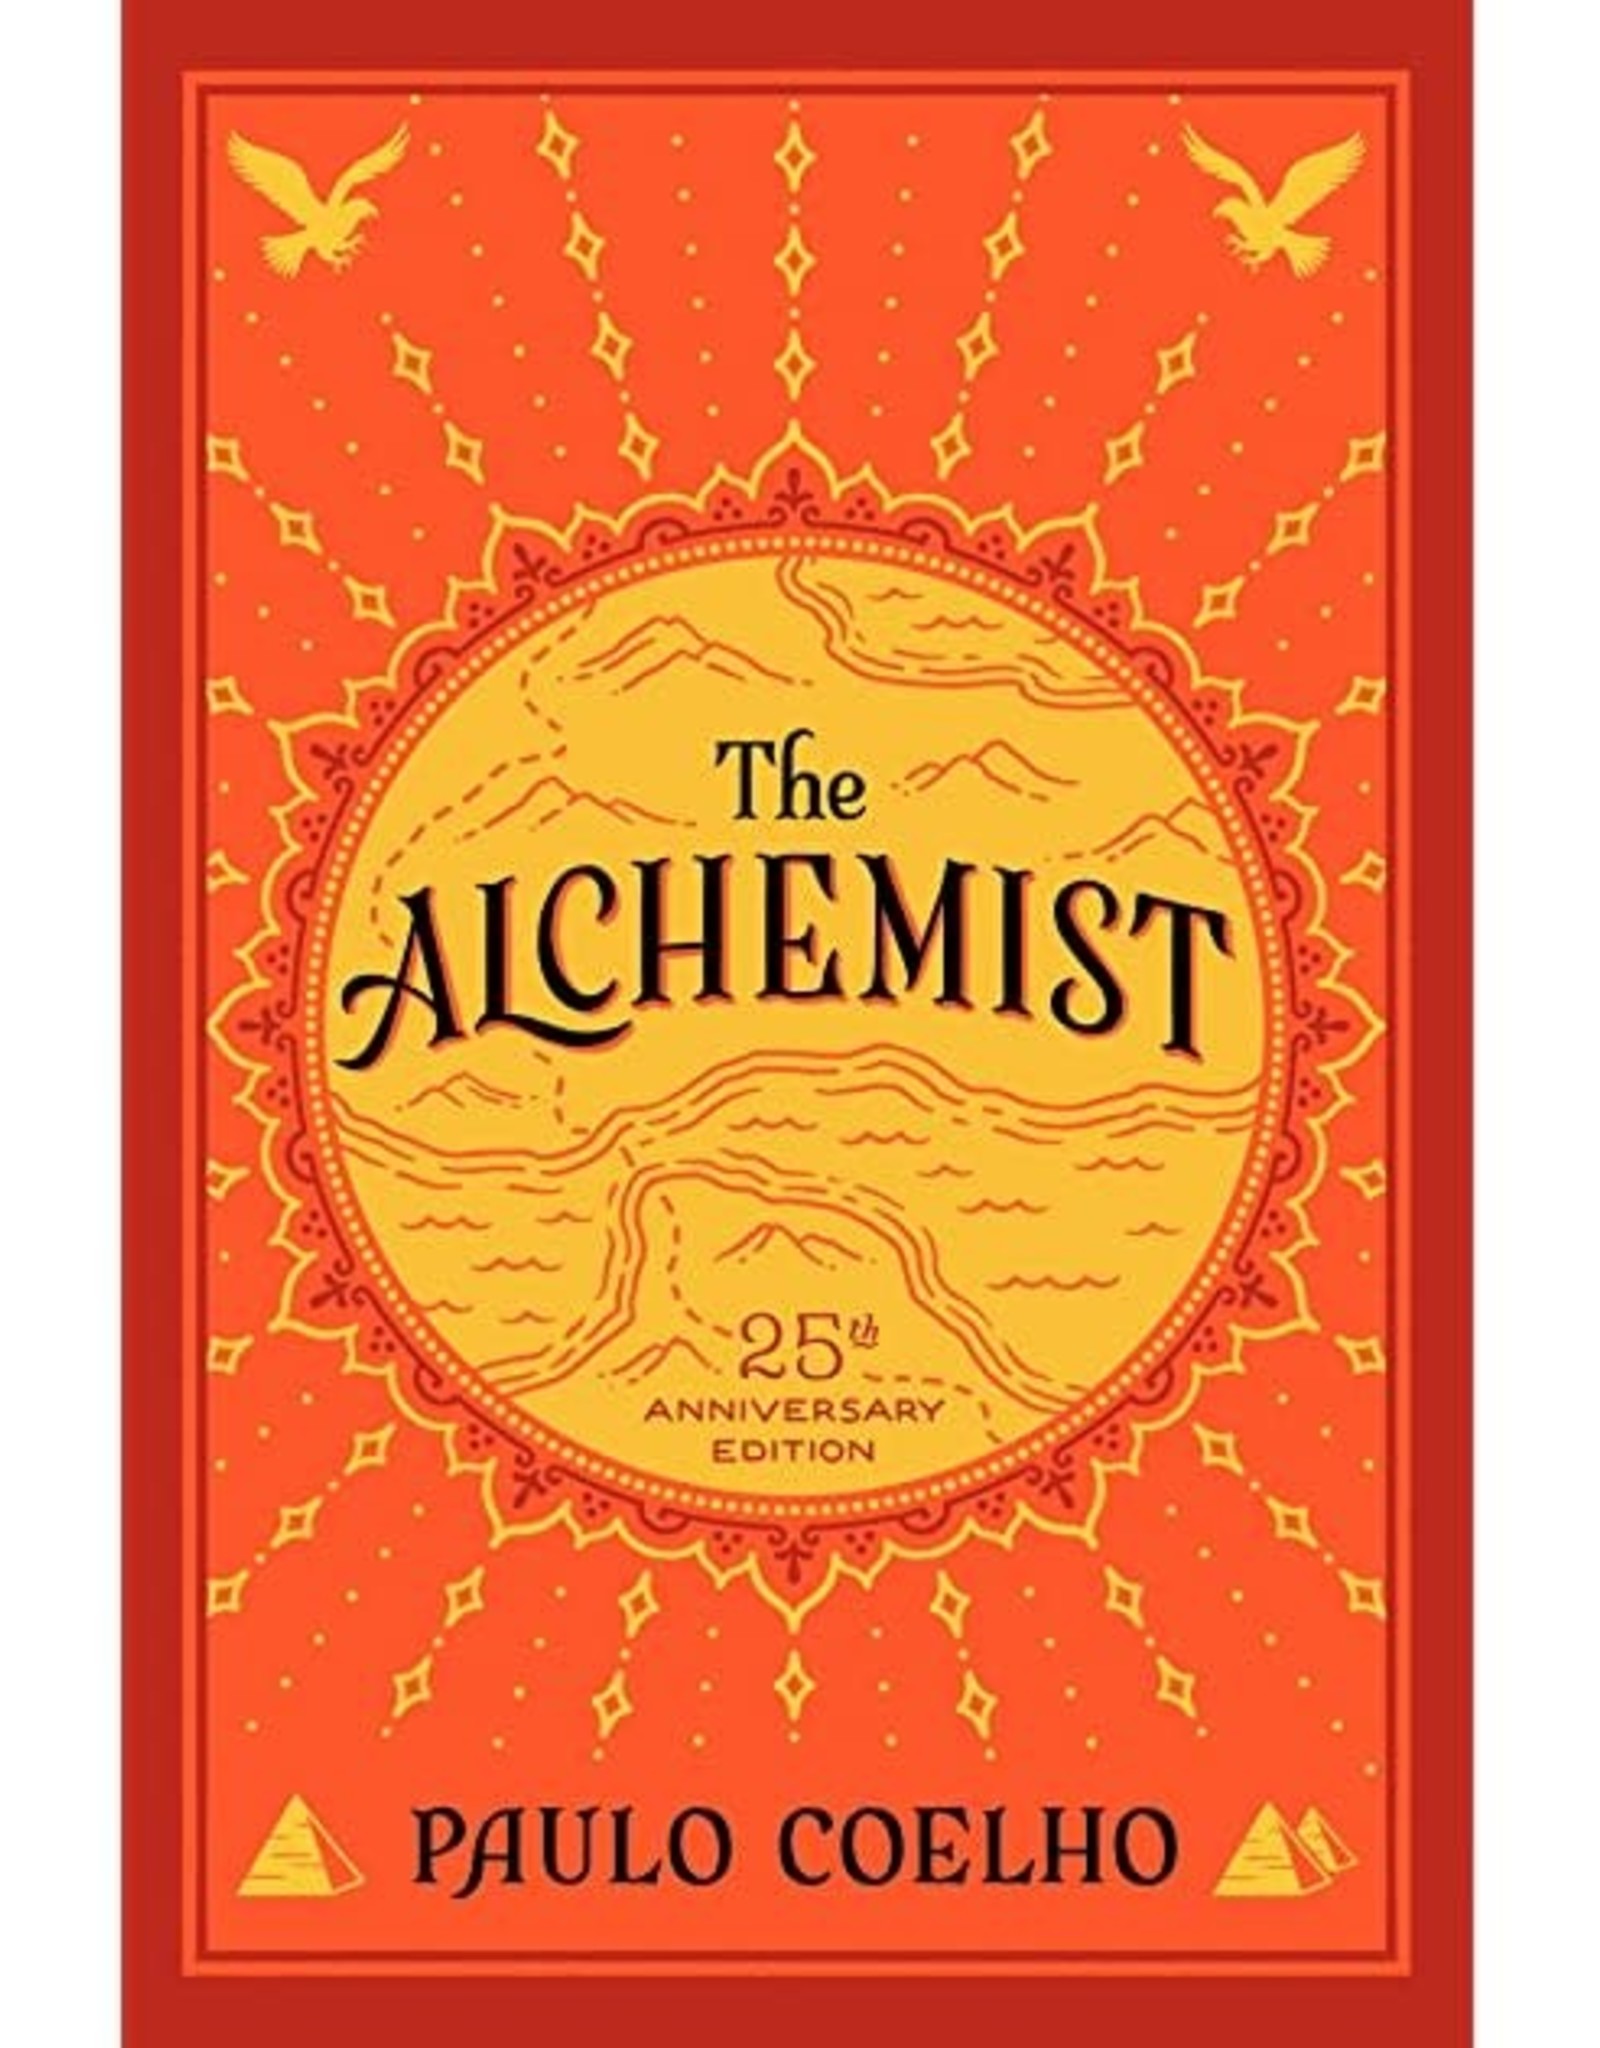 Paulo Coelho Alchemist by Paulo Coelho